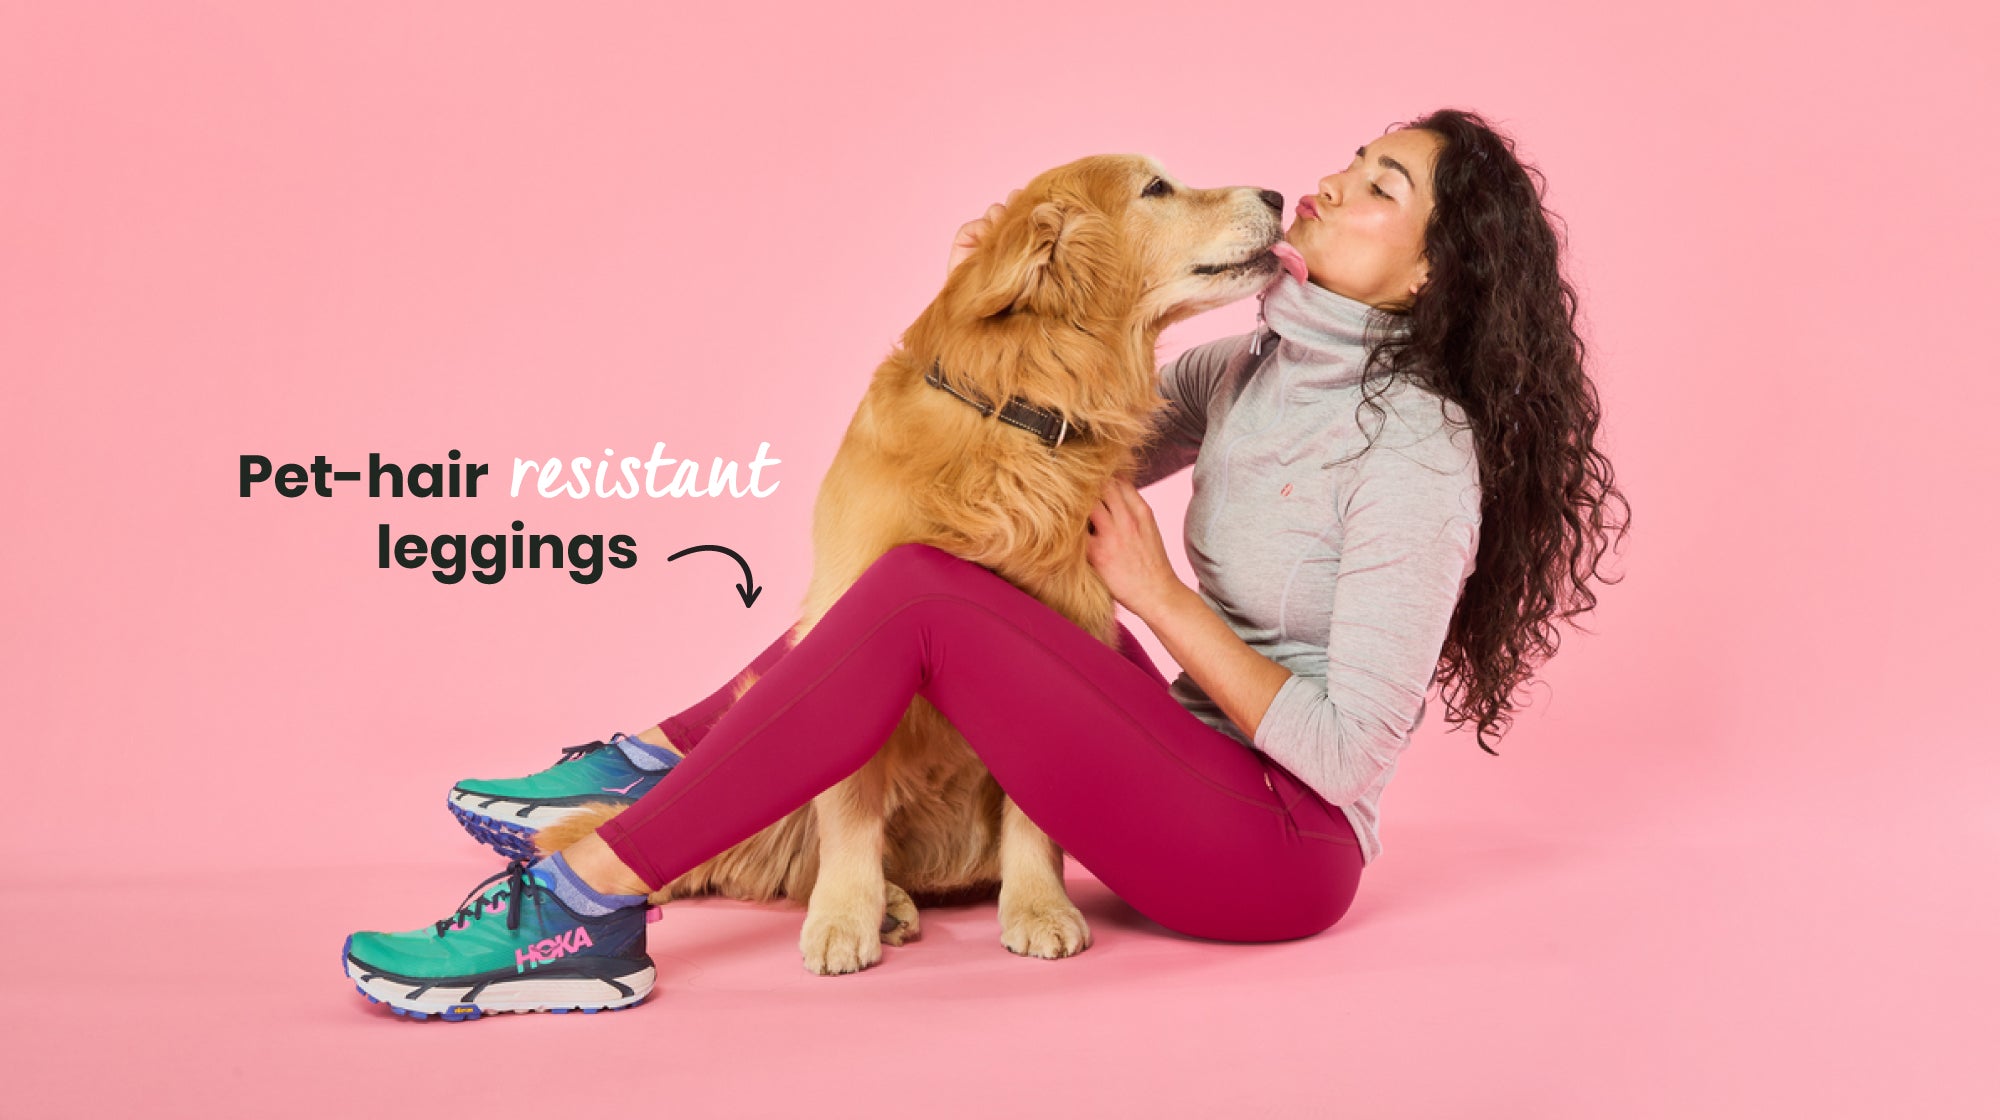 Woman cuddling golden retriever dog, wearing ACAI pet-hair resistant leggings, against a pale pink background